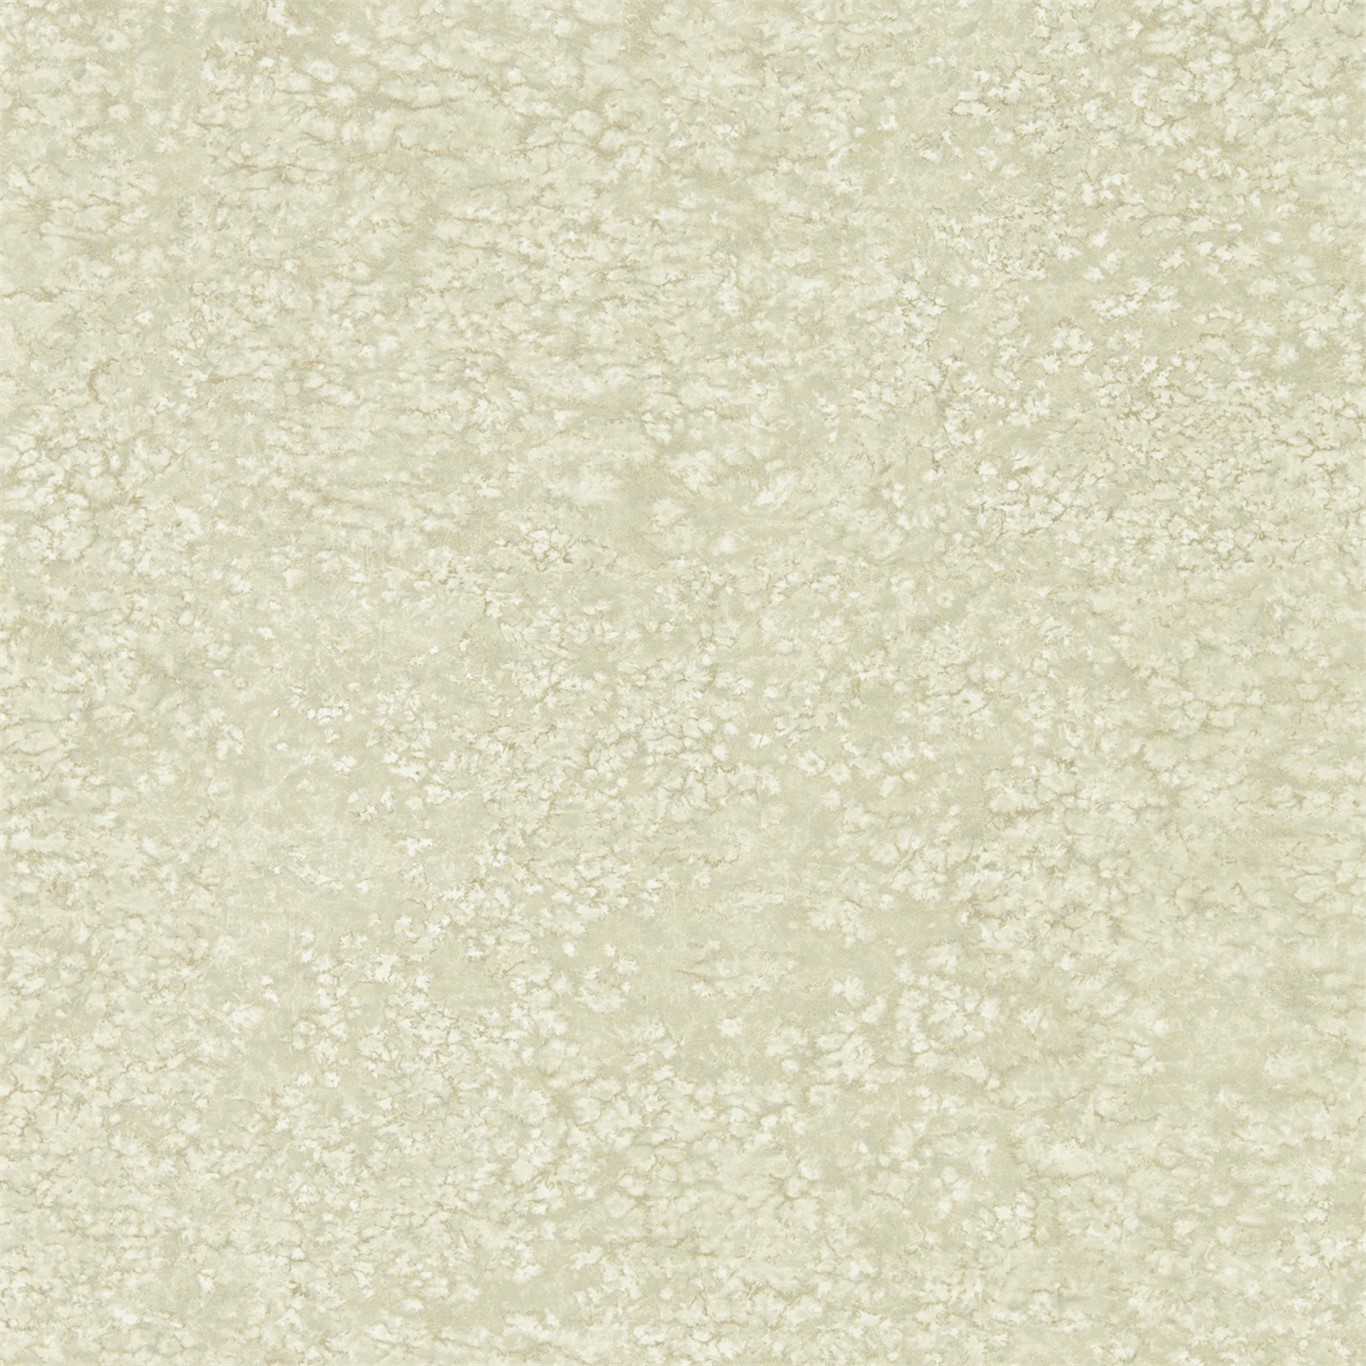 Weathered Stone Plain Sandstone Wallpaper by ZOF